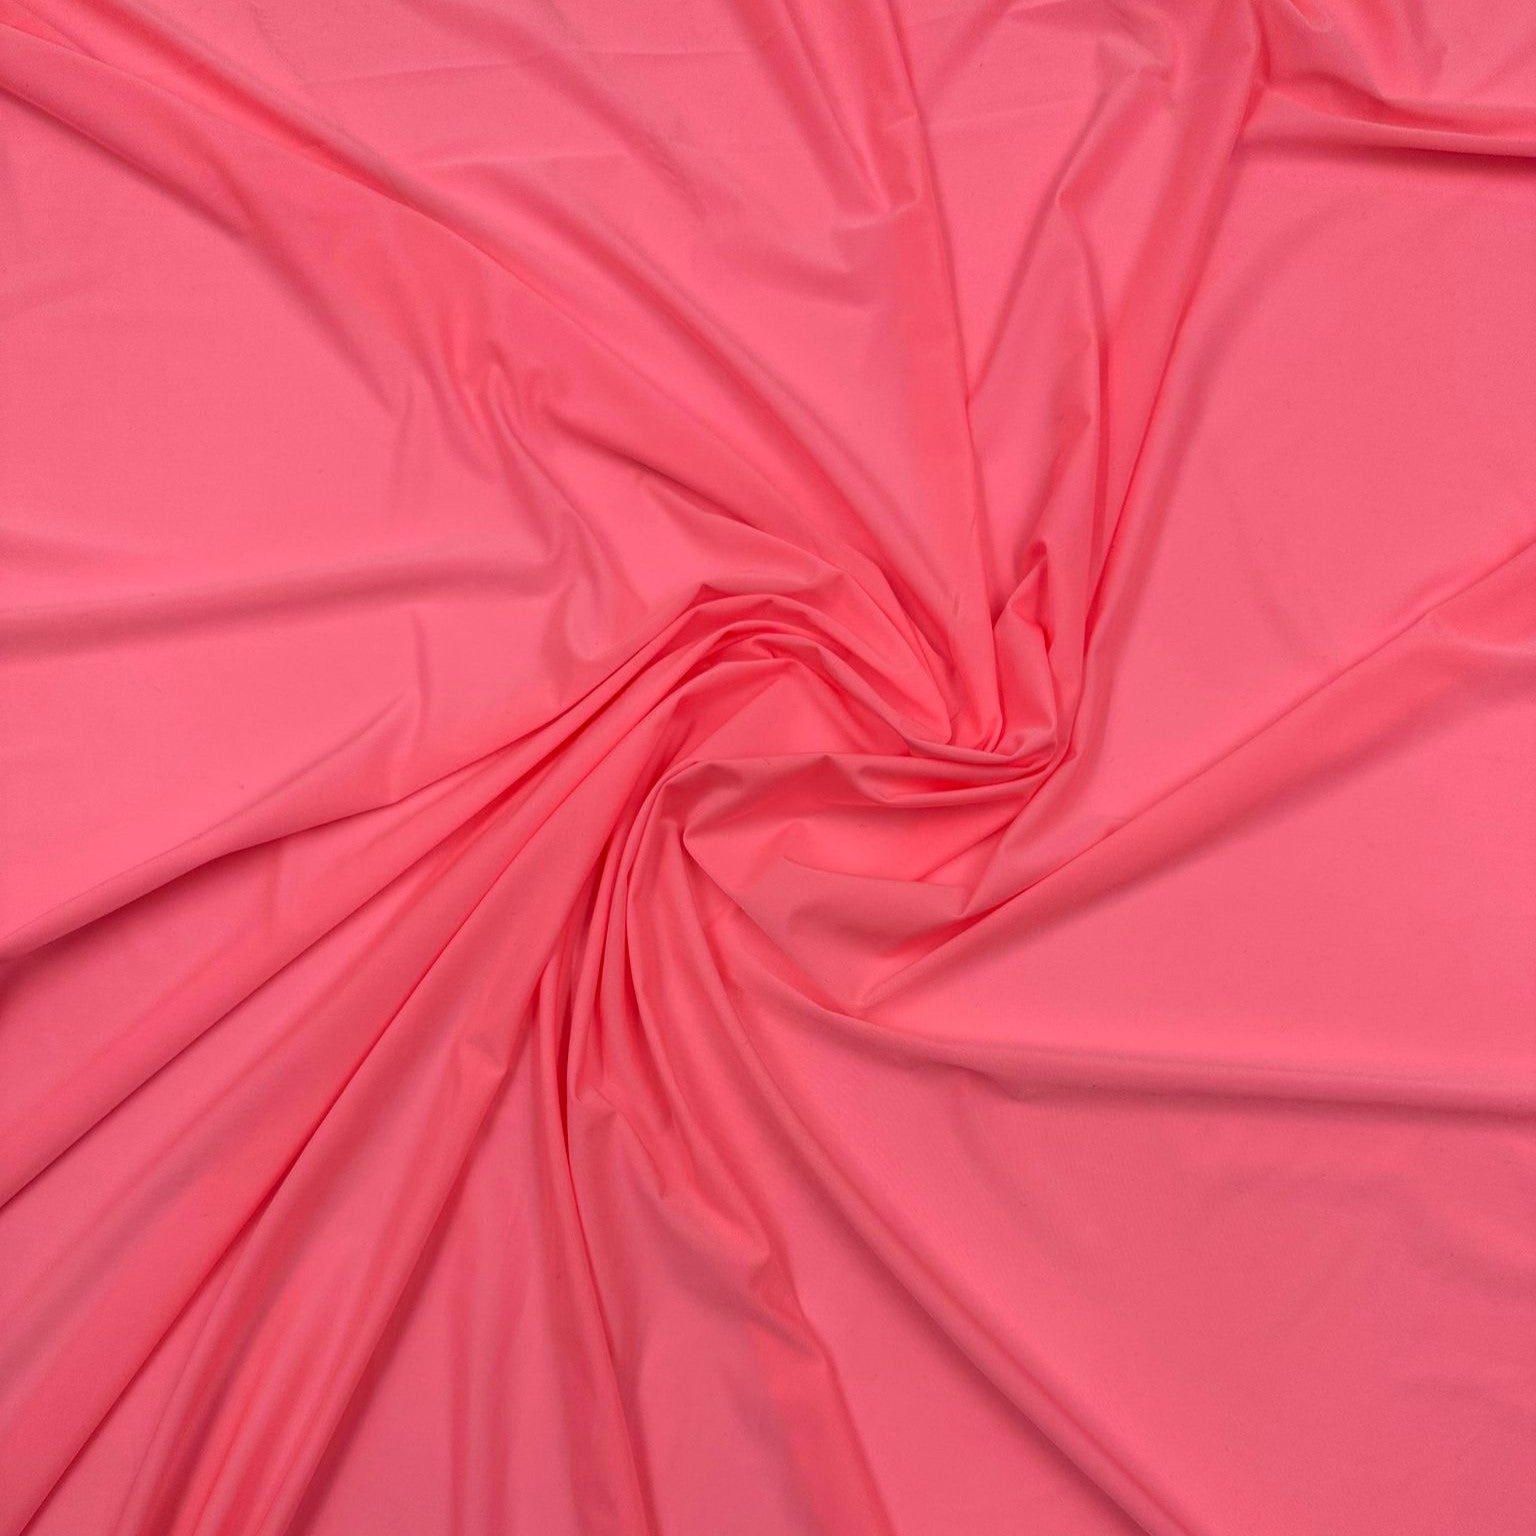 Mist Nylon Spandex - Pink Punch